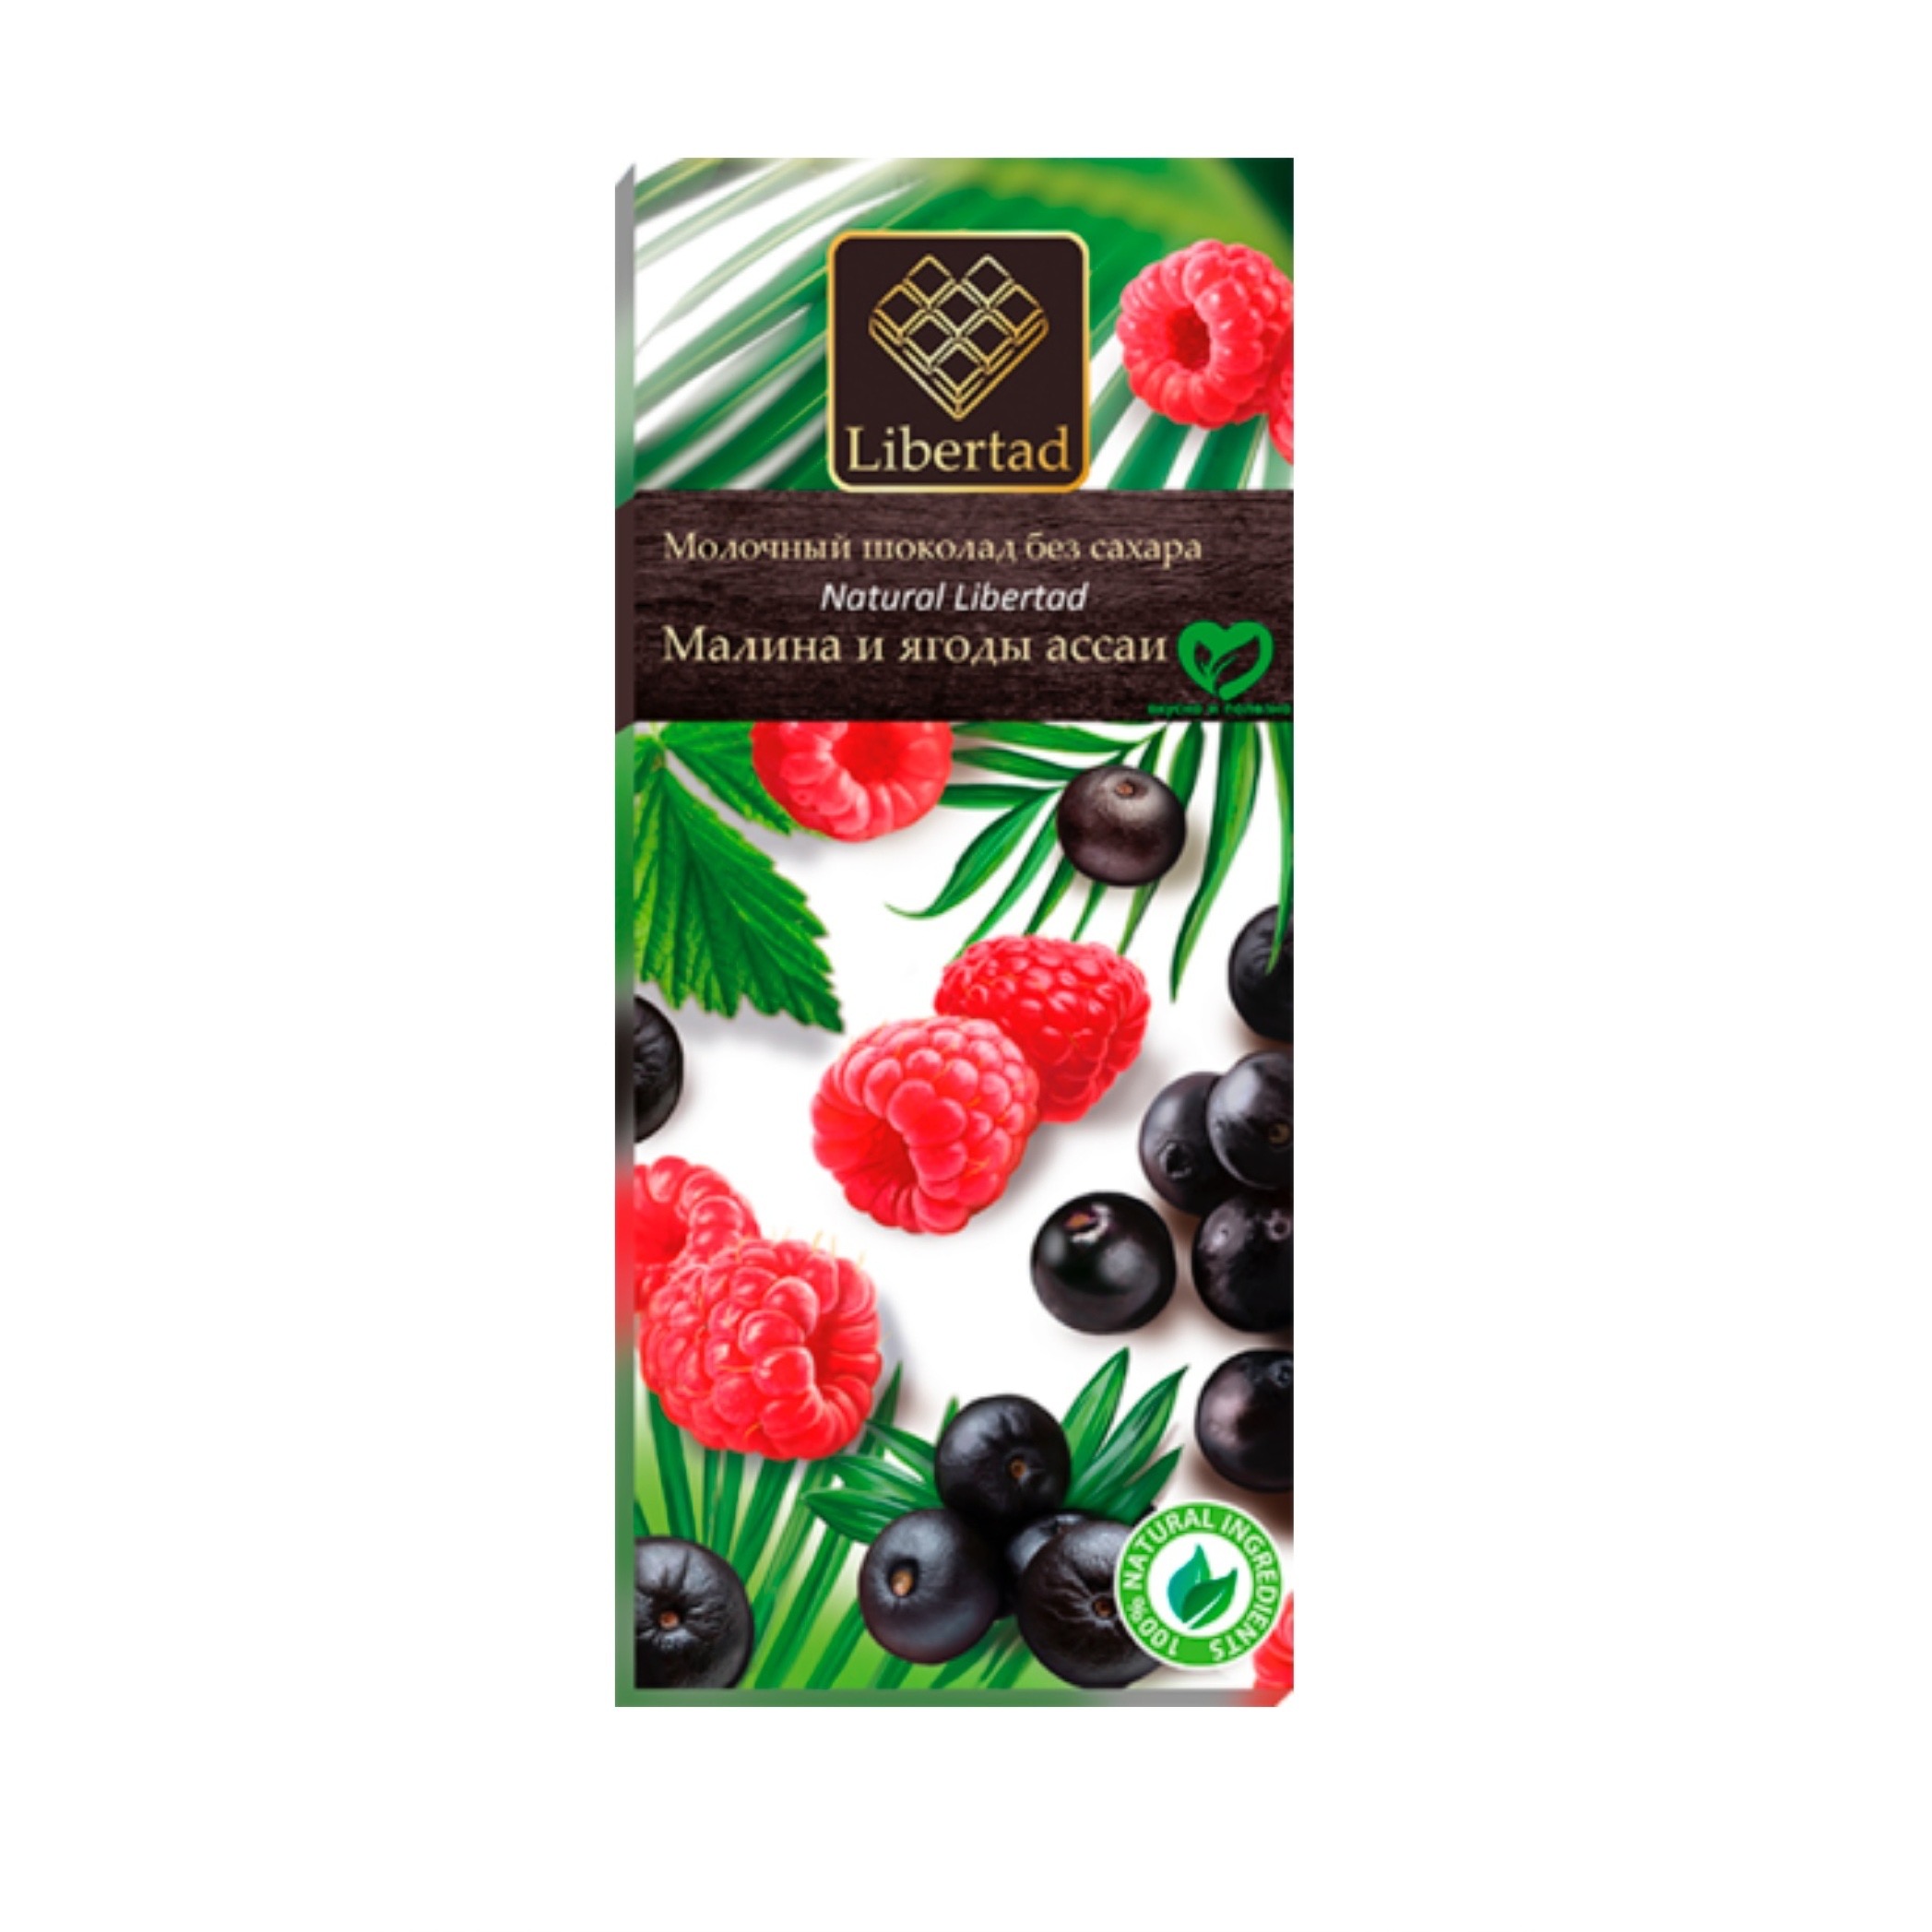 Шоколад молочный "Малина и ягоды асаи" без сахара, Natural Libertad, 65 г